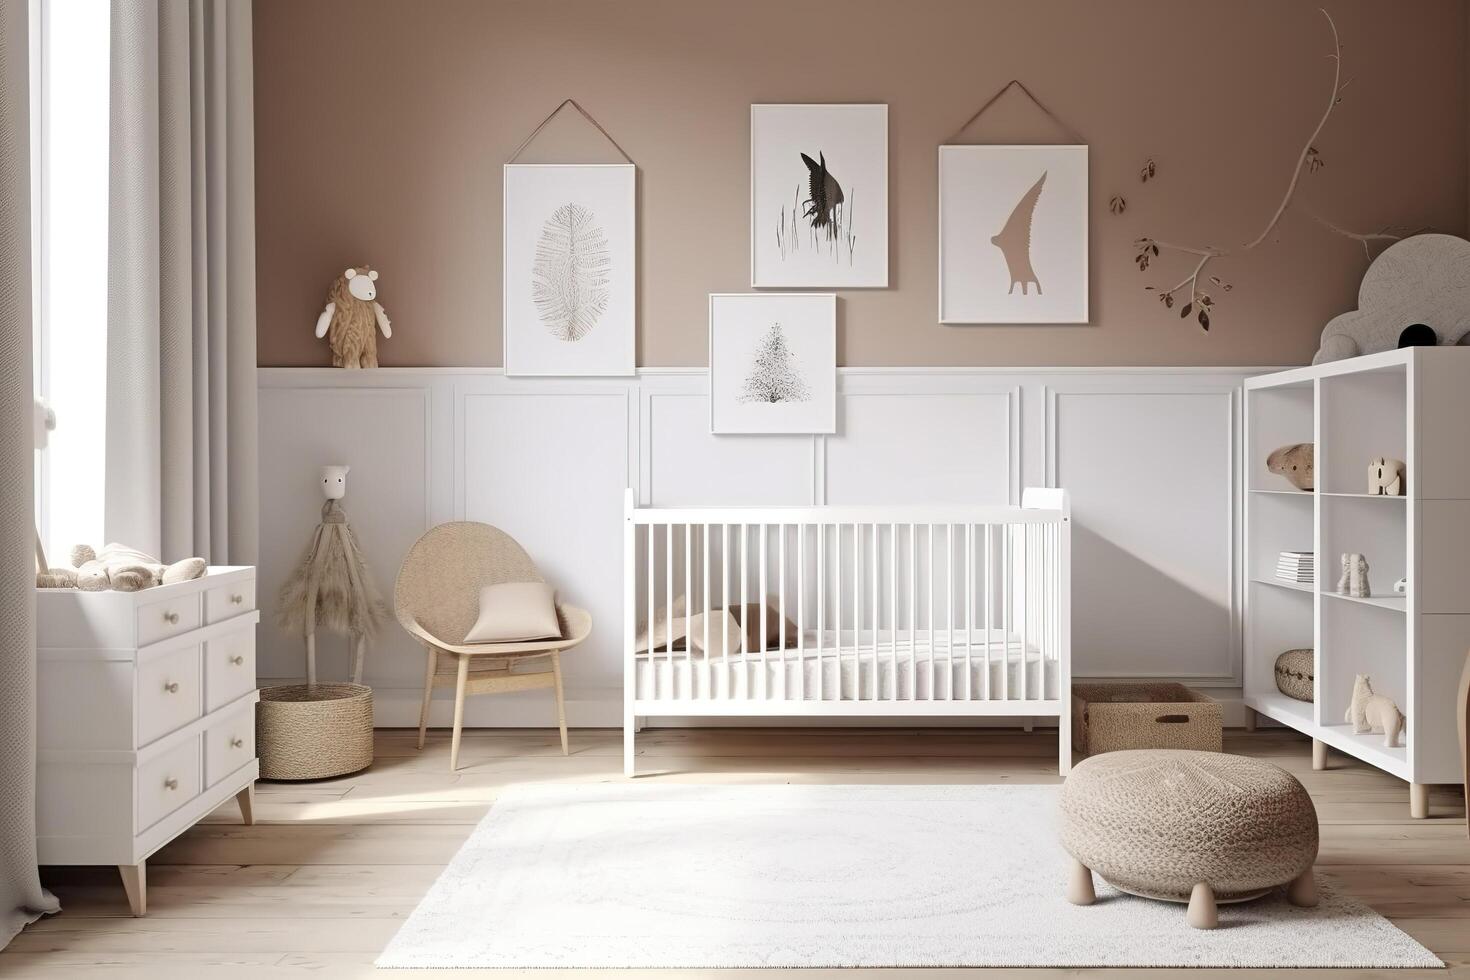 Modern minimalist nursery room in scandinavian style. Baby room interior in light colours, image photo